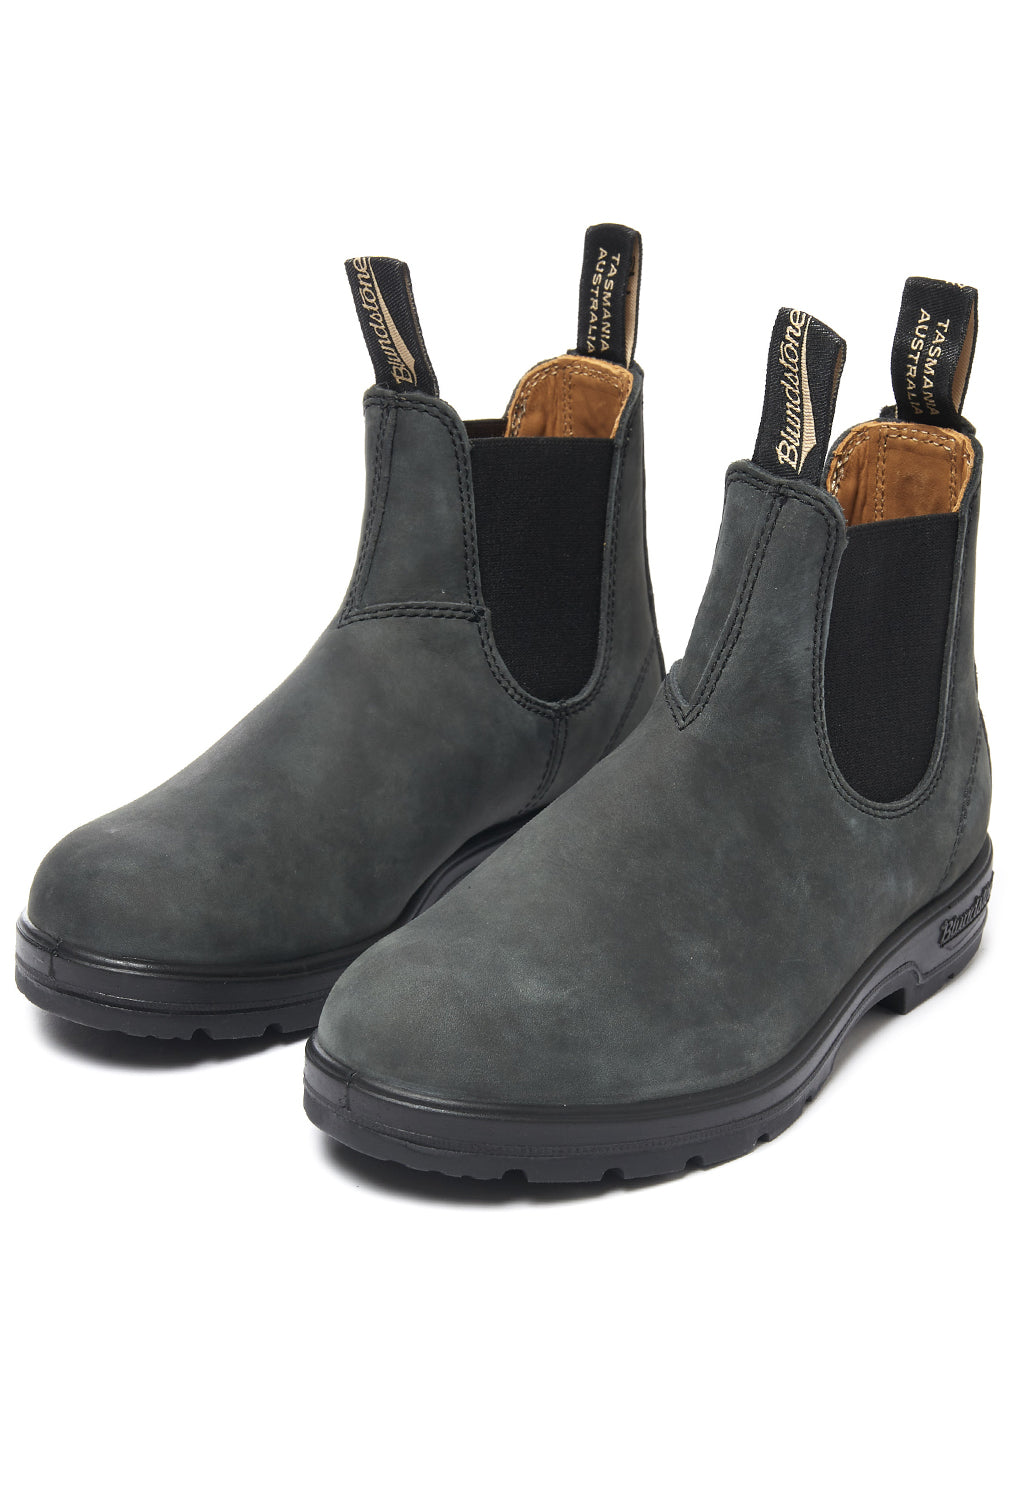 Blundstone 587 Boots - Rustic Black